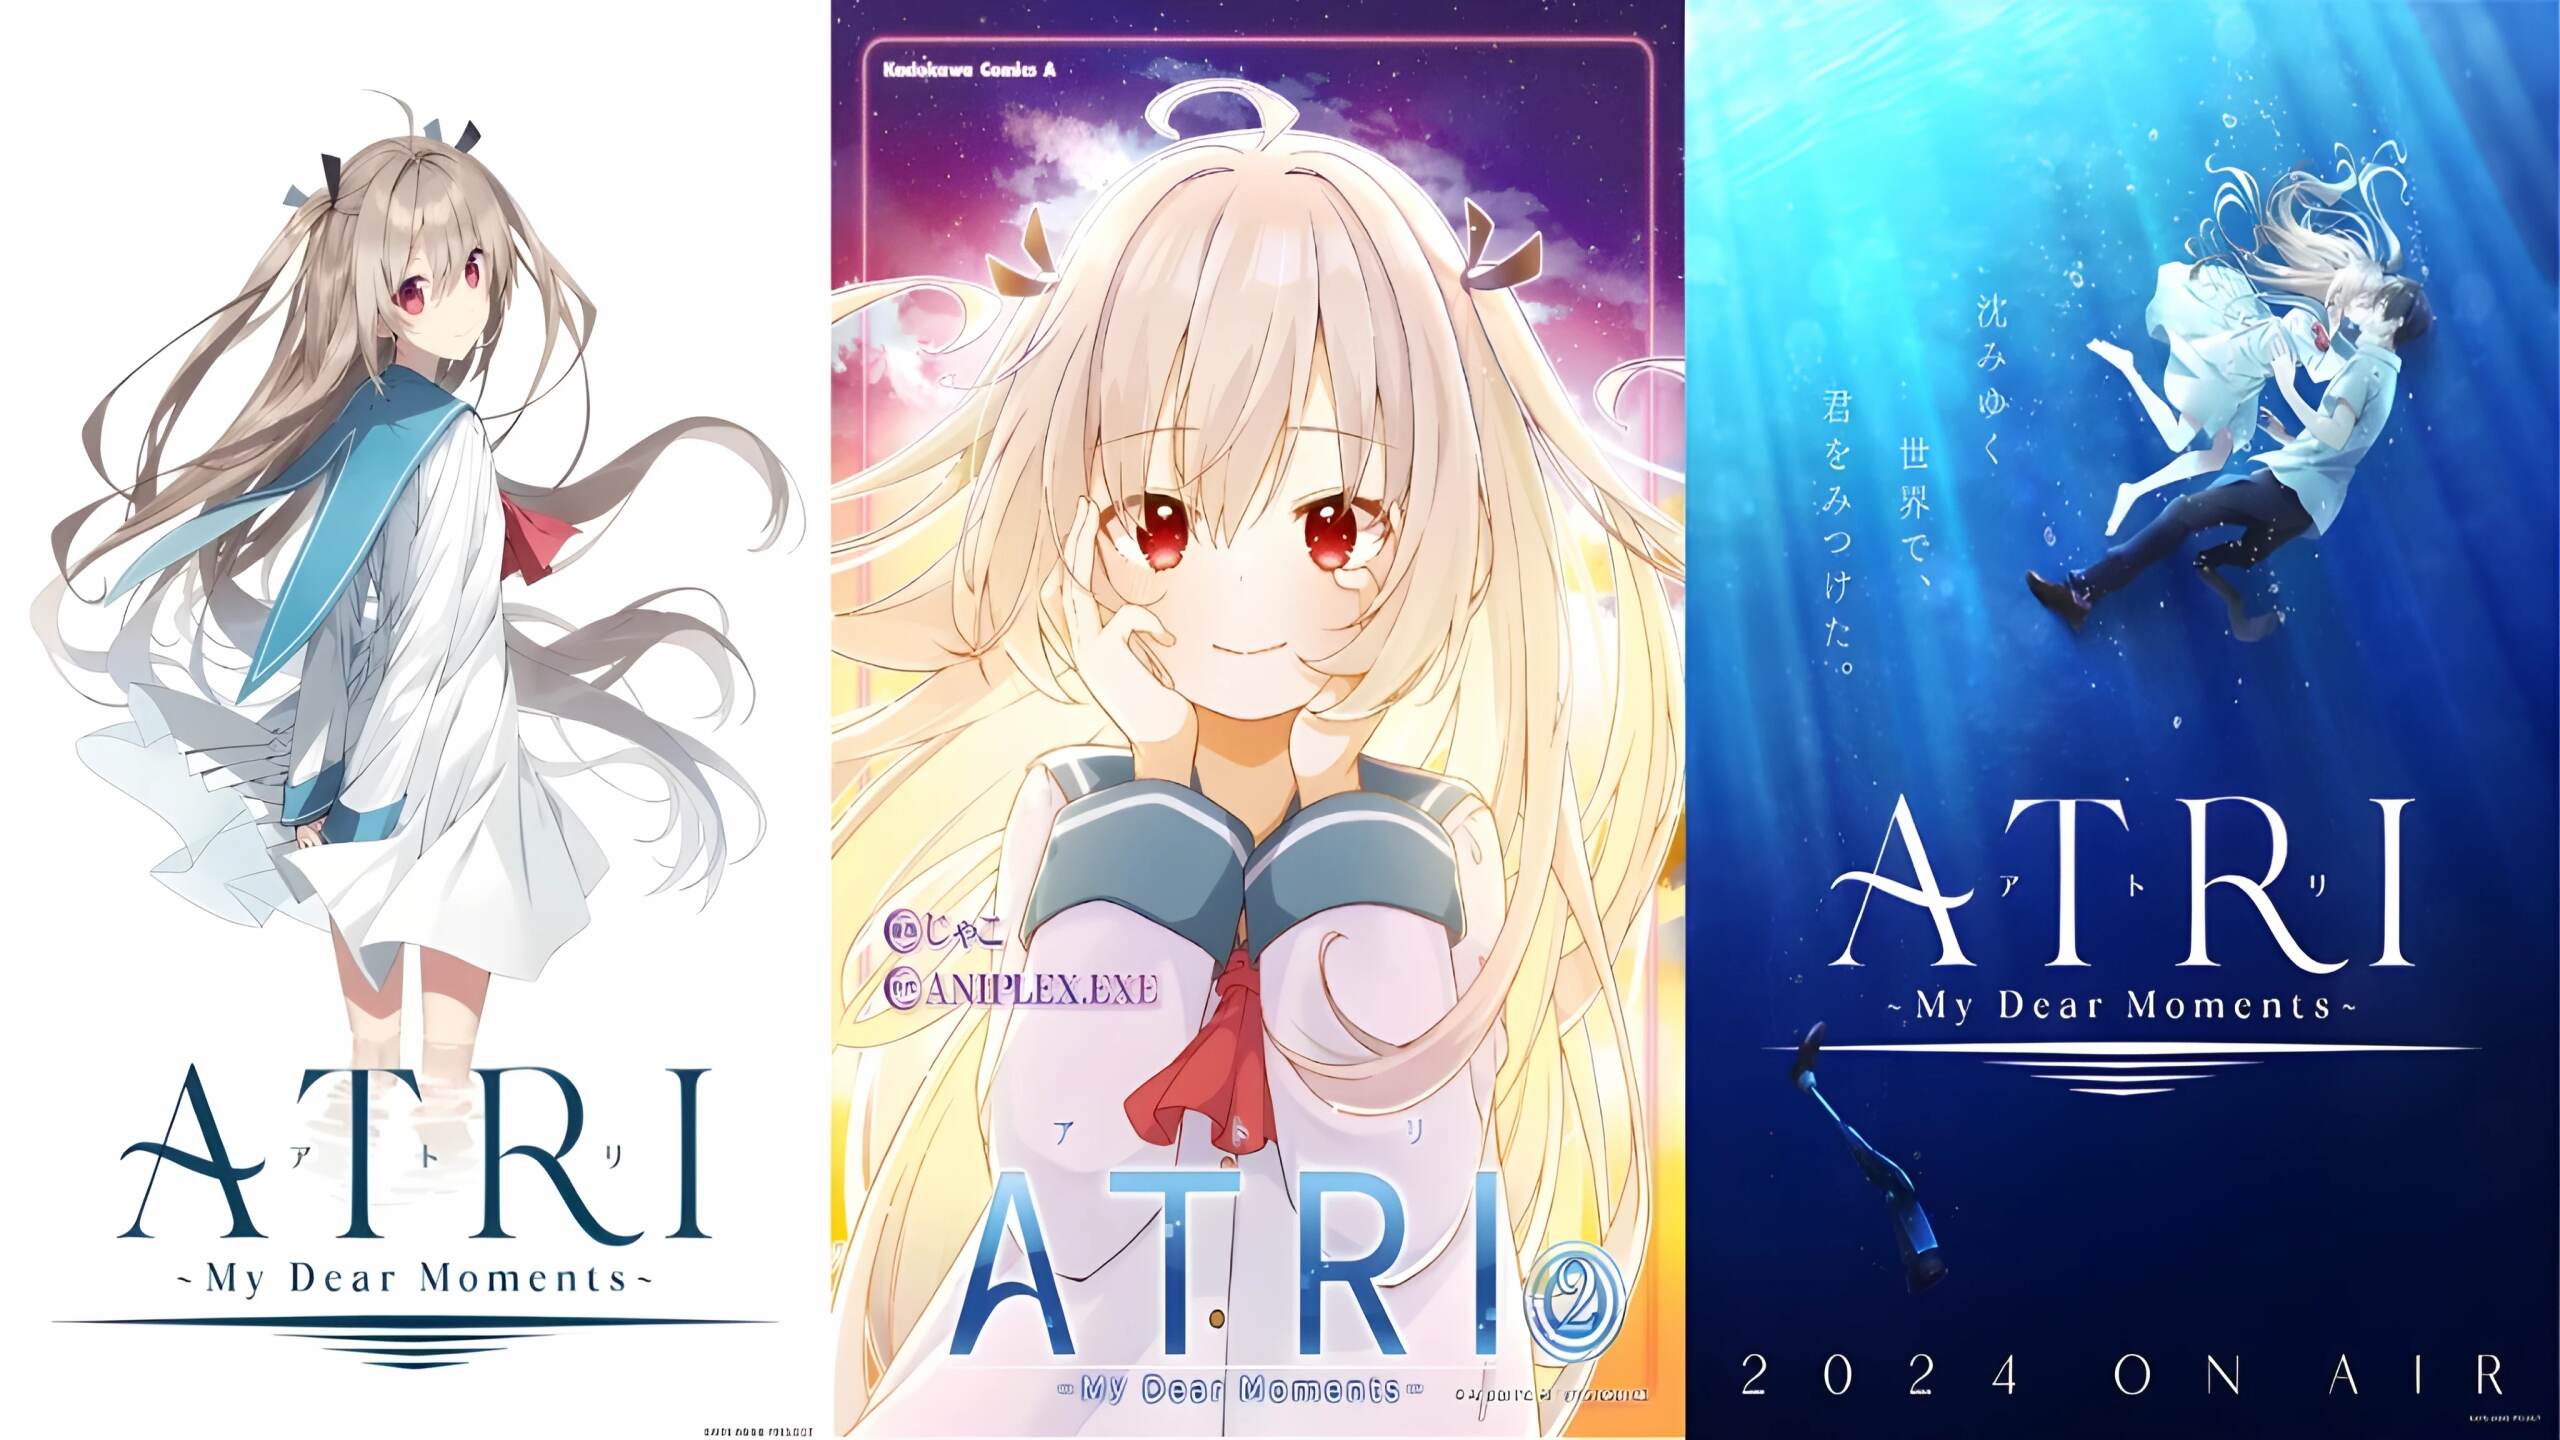 ATRI-My Dear Moments- Anime & Manga Posters